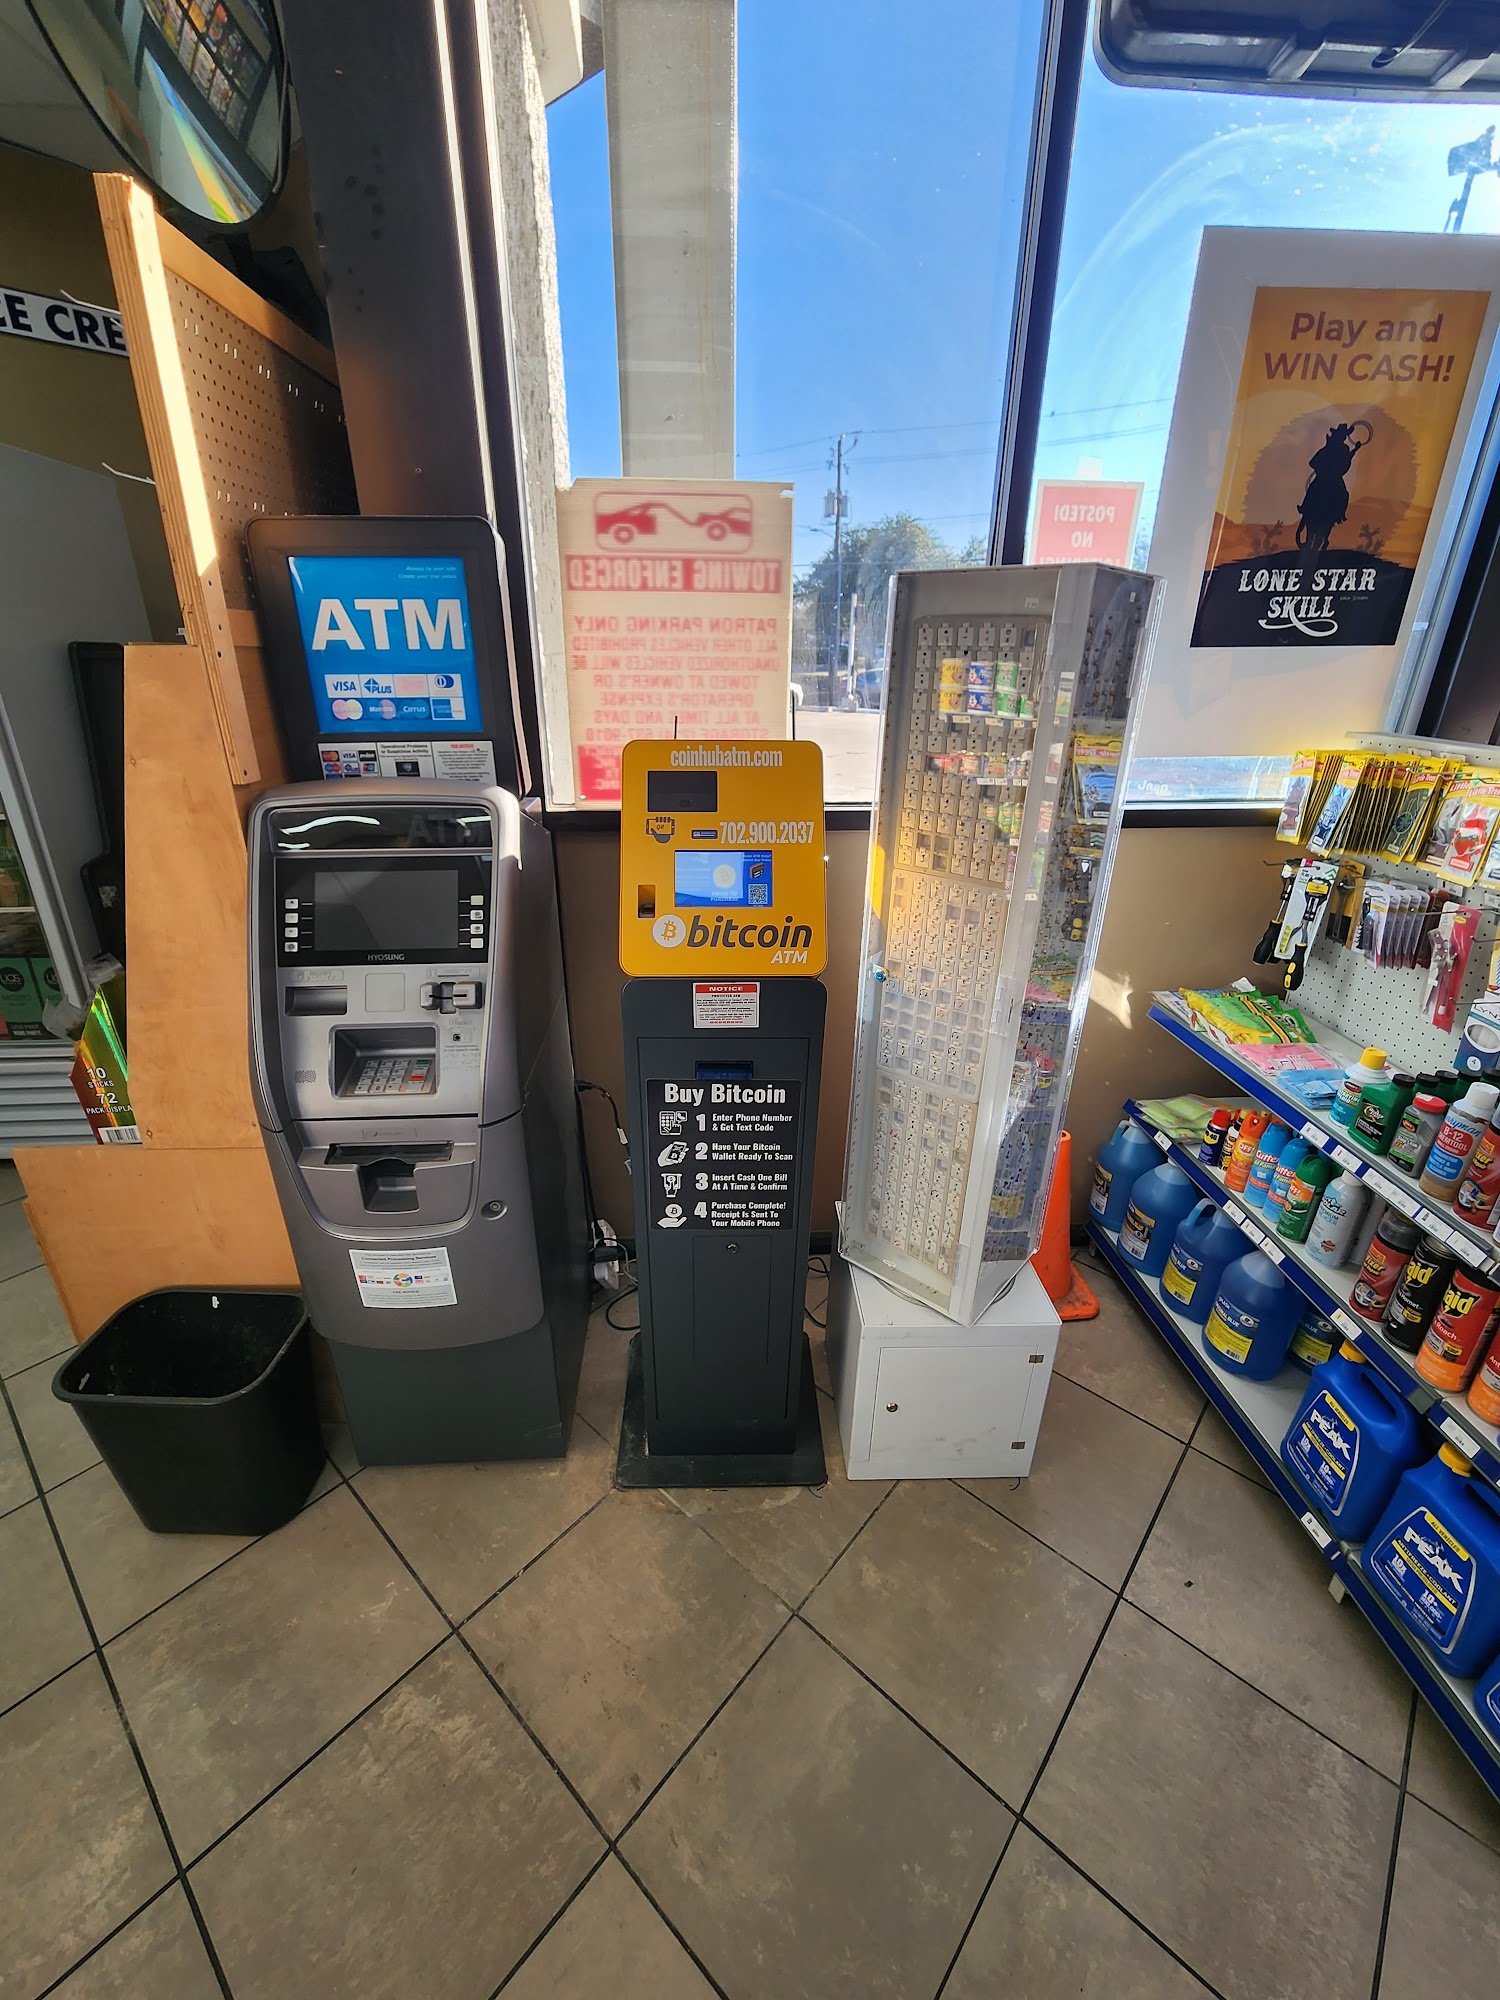 Dallas Bitcoin ATM - Coinhub